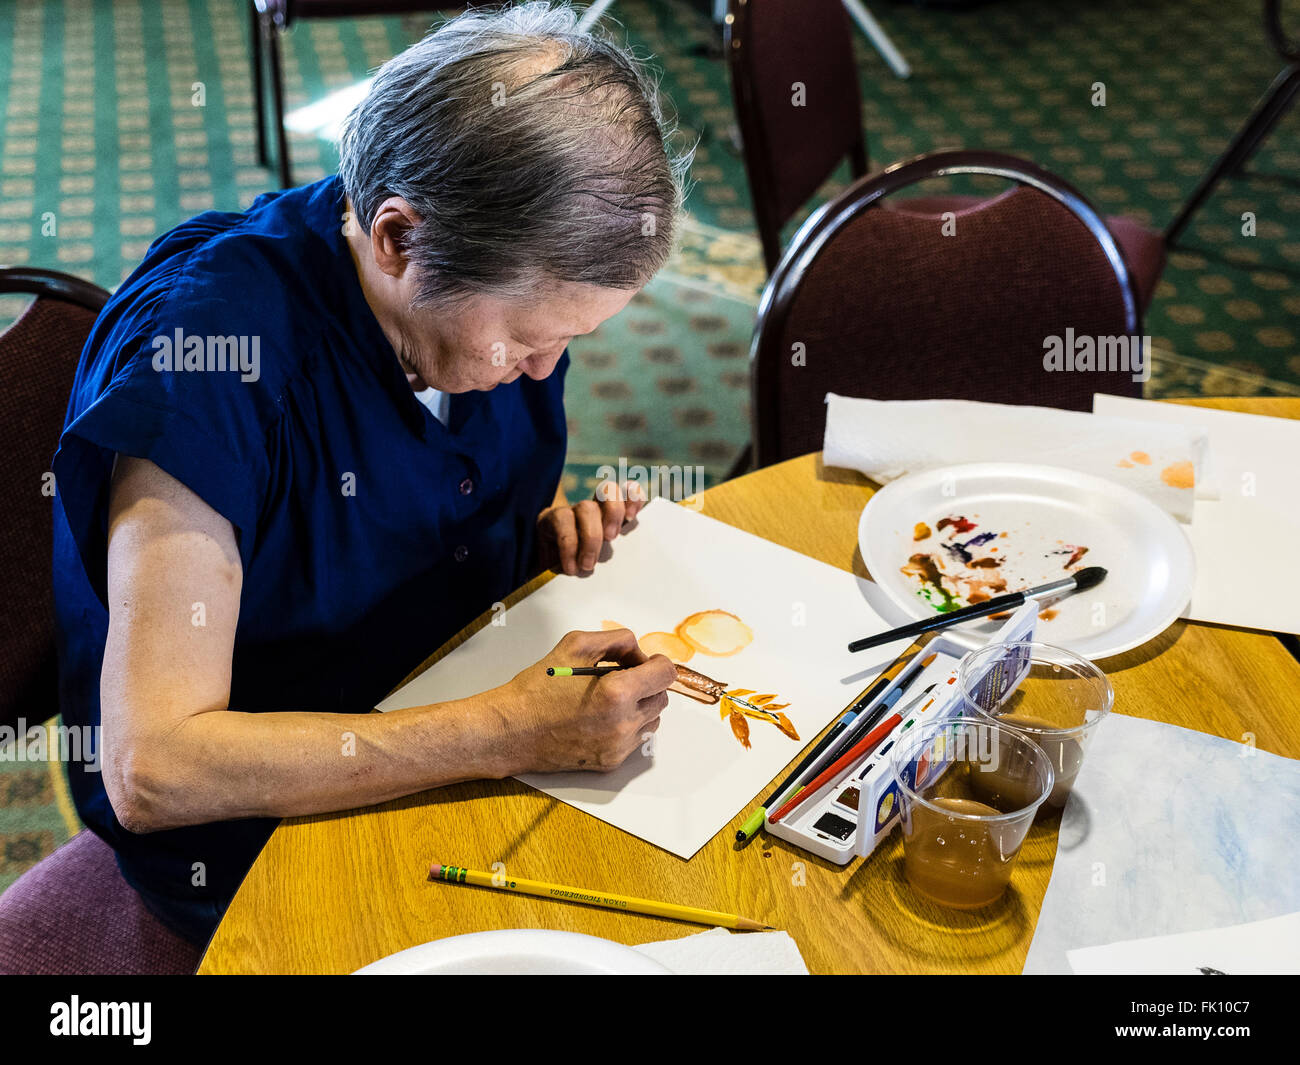 A Female Senior Citizen Paints In A Watercolor Class For Seniors